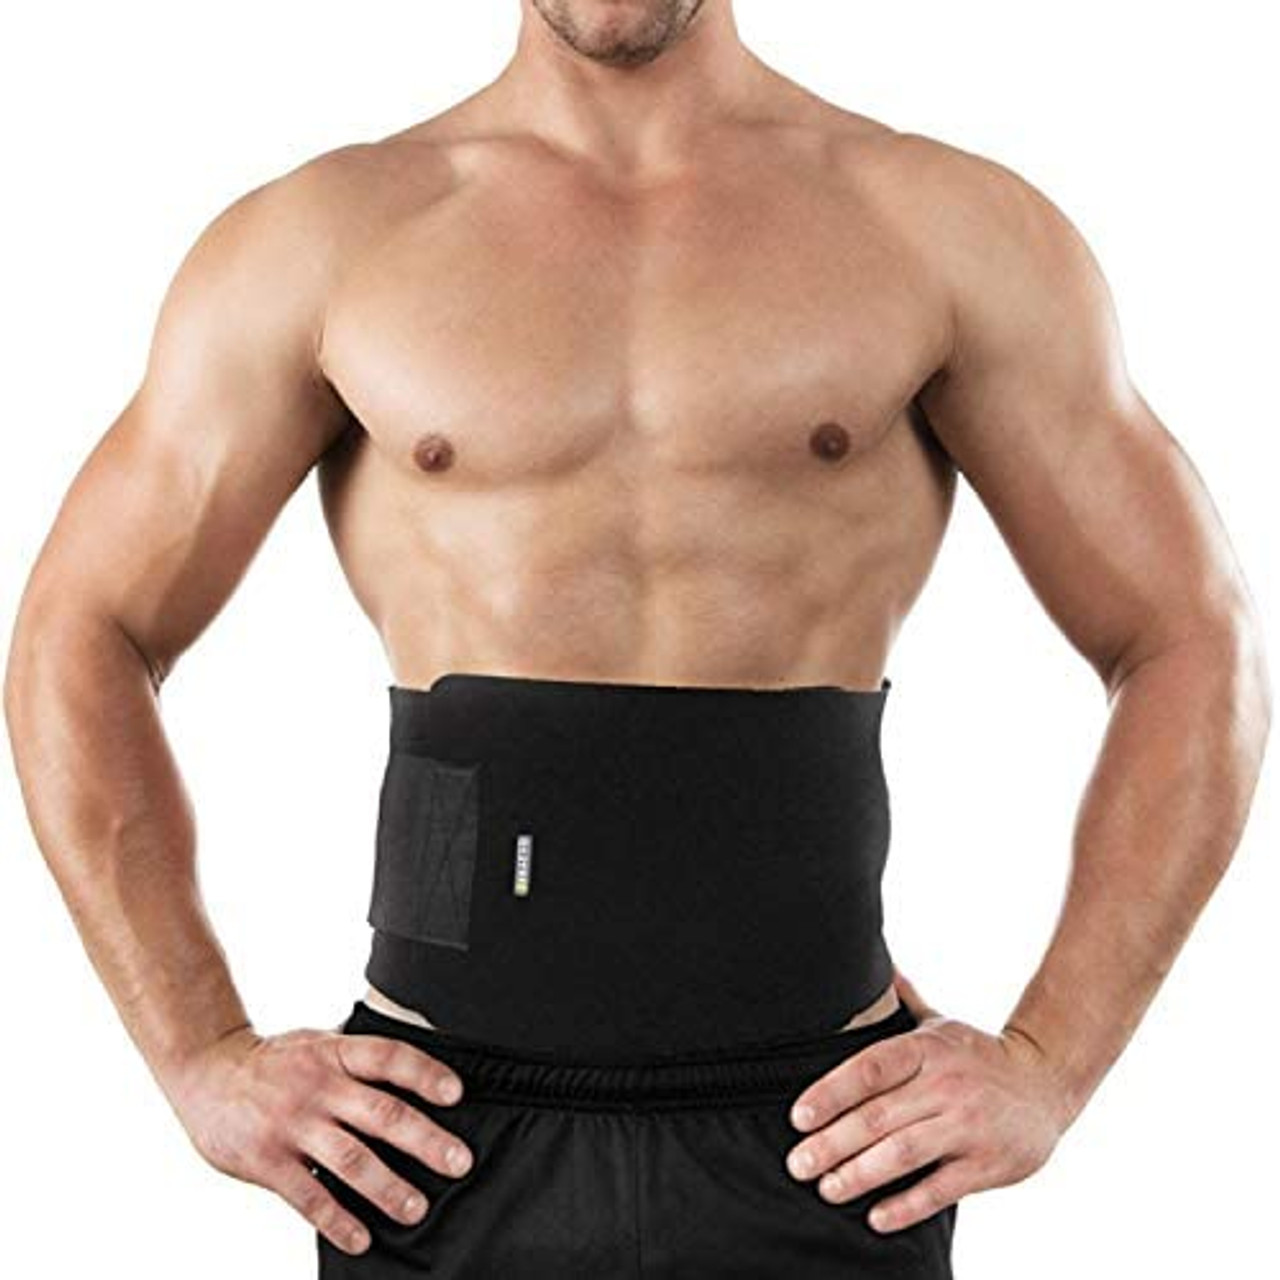 Kumar Retail Sweat Shaper Belt, Slimming belt, Waist shaper, Tummy Trimmer,  Sweat slim belt, Belly fat burner, Stomach fat burner, Hot shaper belt,  Best Quality, Super stretch, Unisex body shaper for men